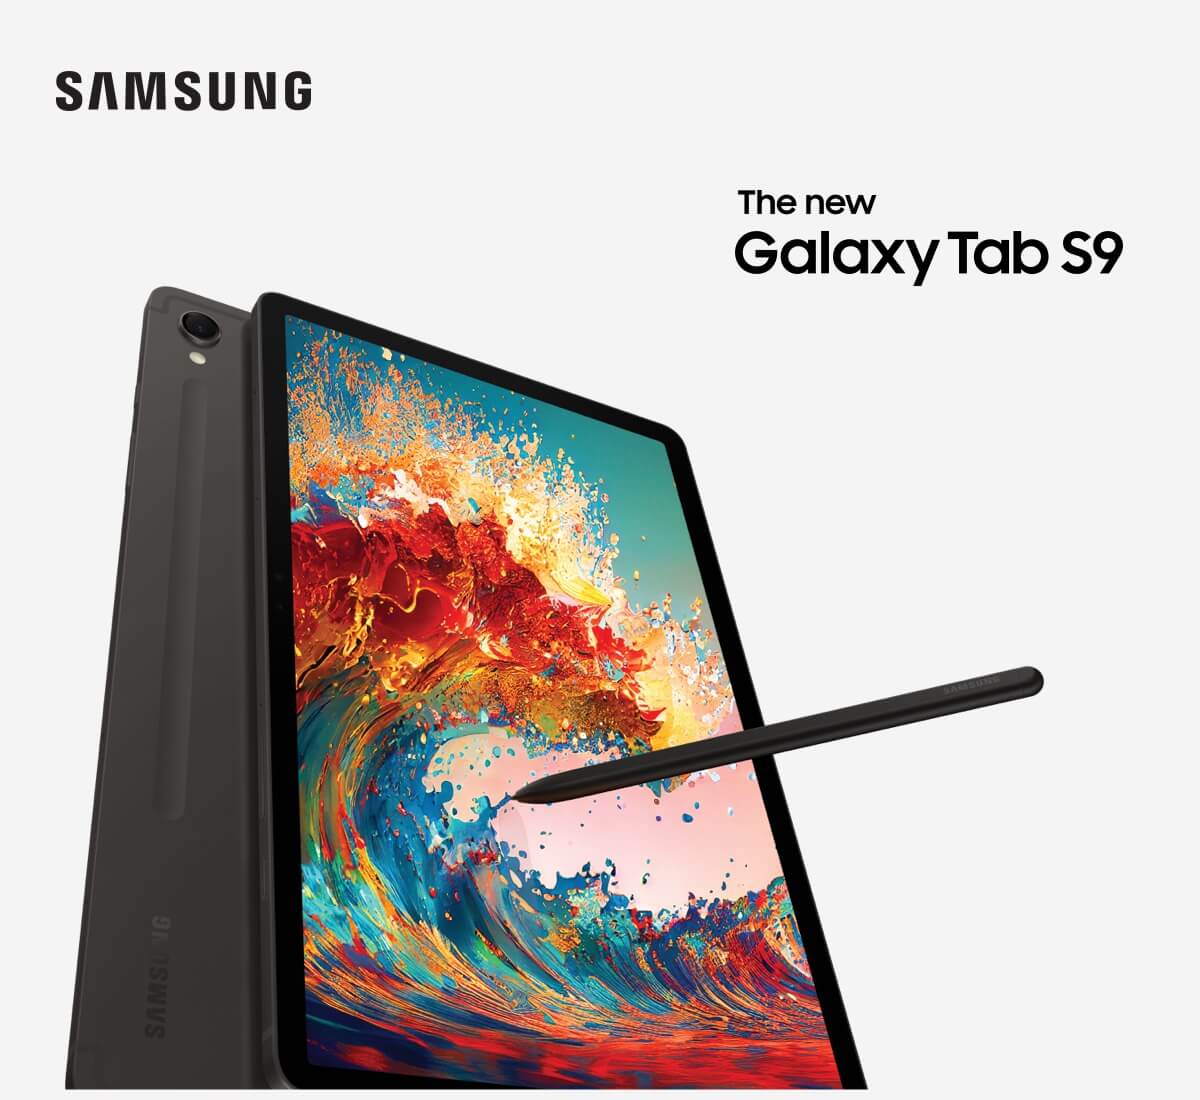 Samsung. The new Galaxy Tab S9